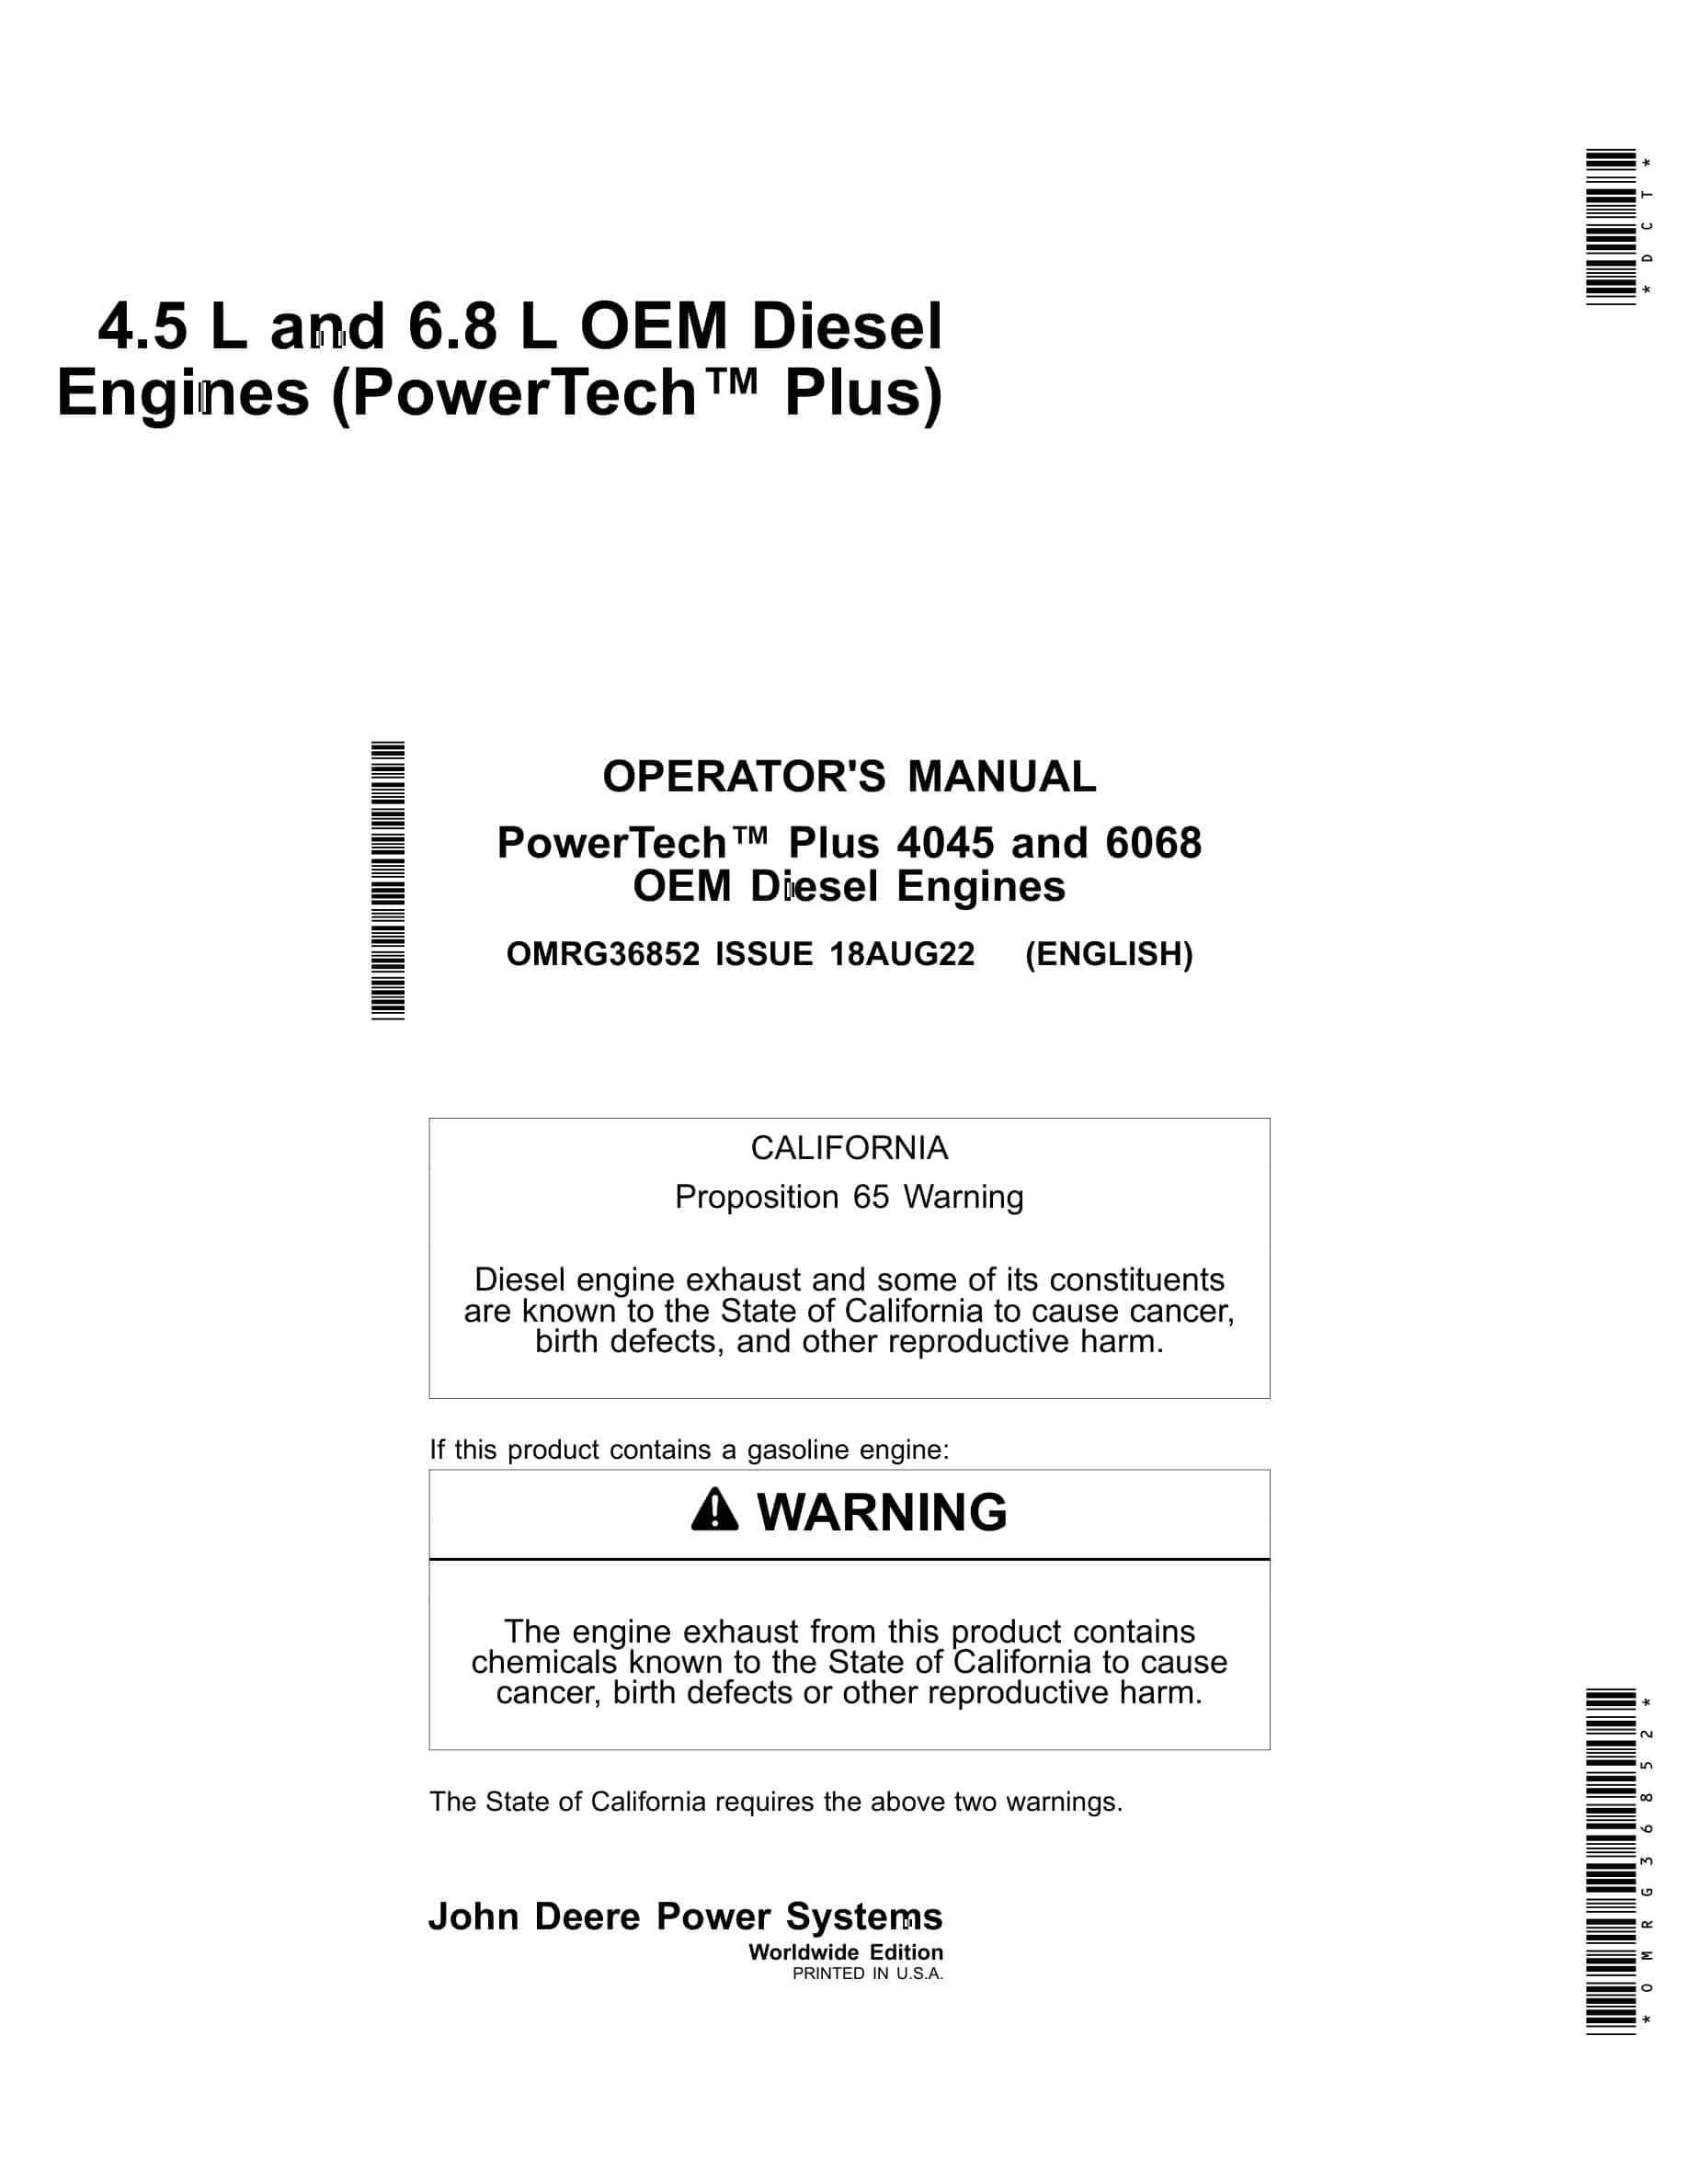 John Deere PowerTech 4.5 L and 6.8 L OEM 4045 and 6068 Diesel Engines Operator Manual OMRG36852-1